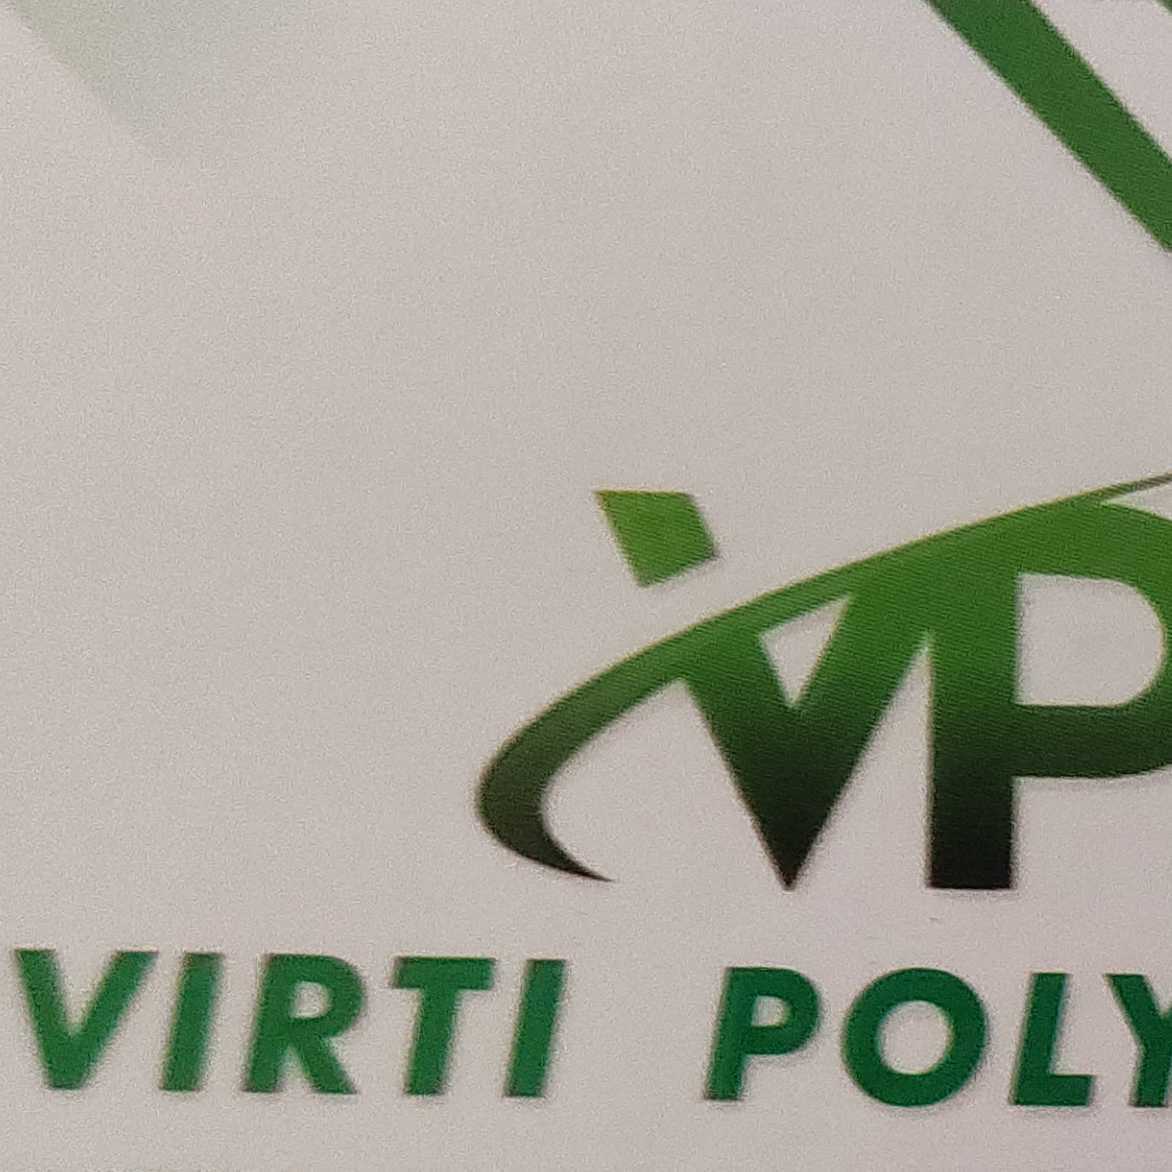 Virti Polypack Virti Polypack gujarat india Plastic4trade